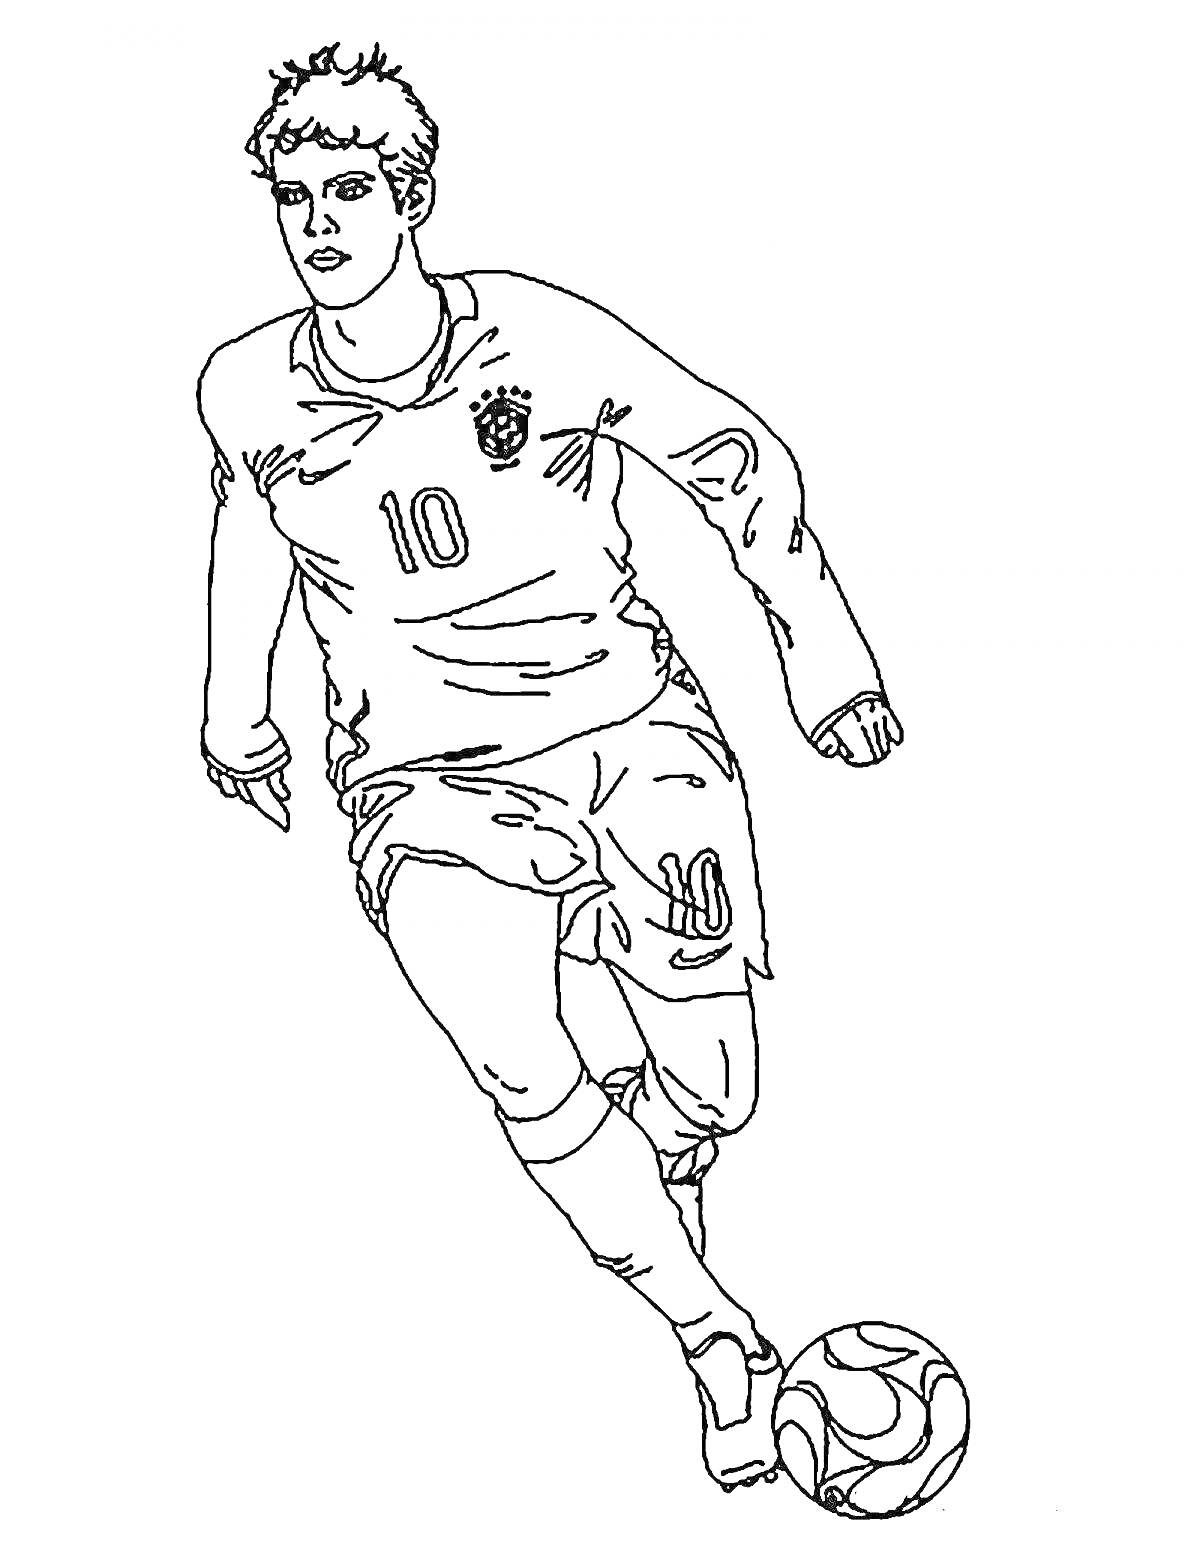 Раскраска Футболист с мячом, в майке с номером 10, бежит на поле